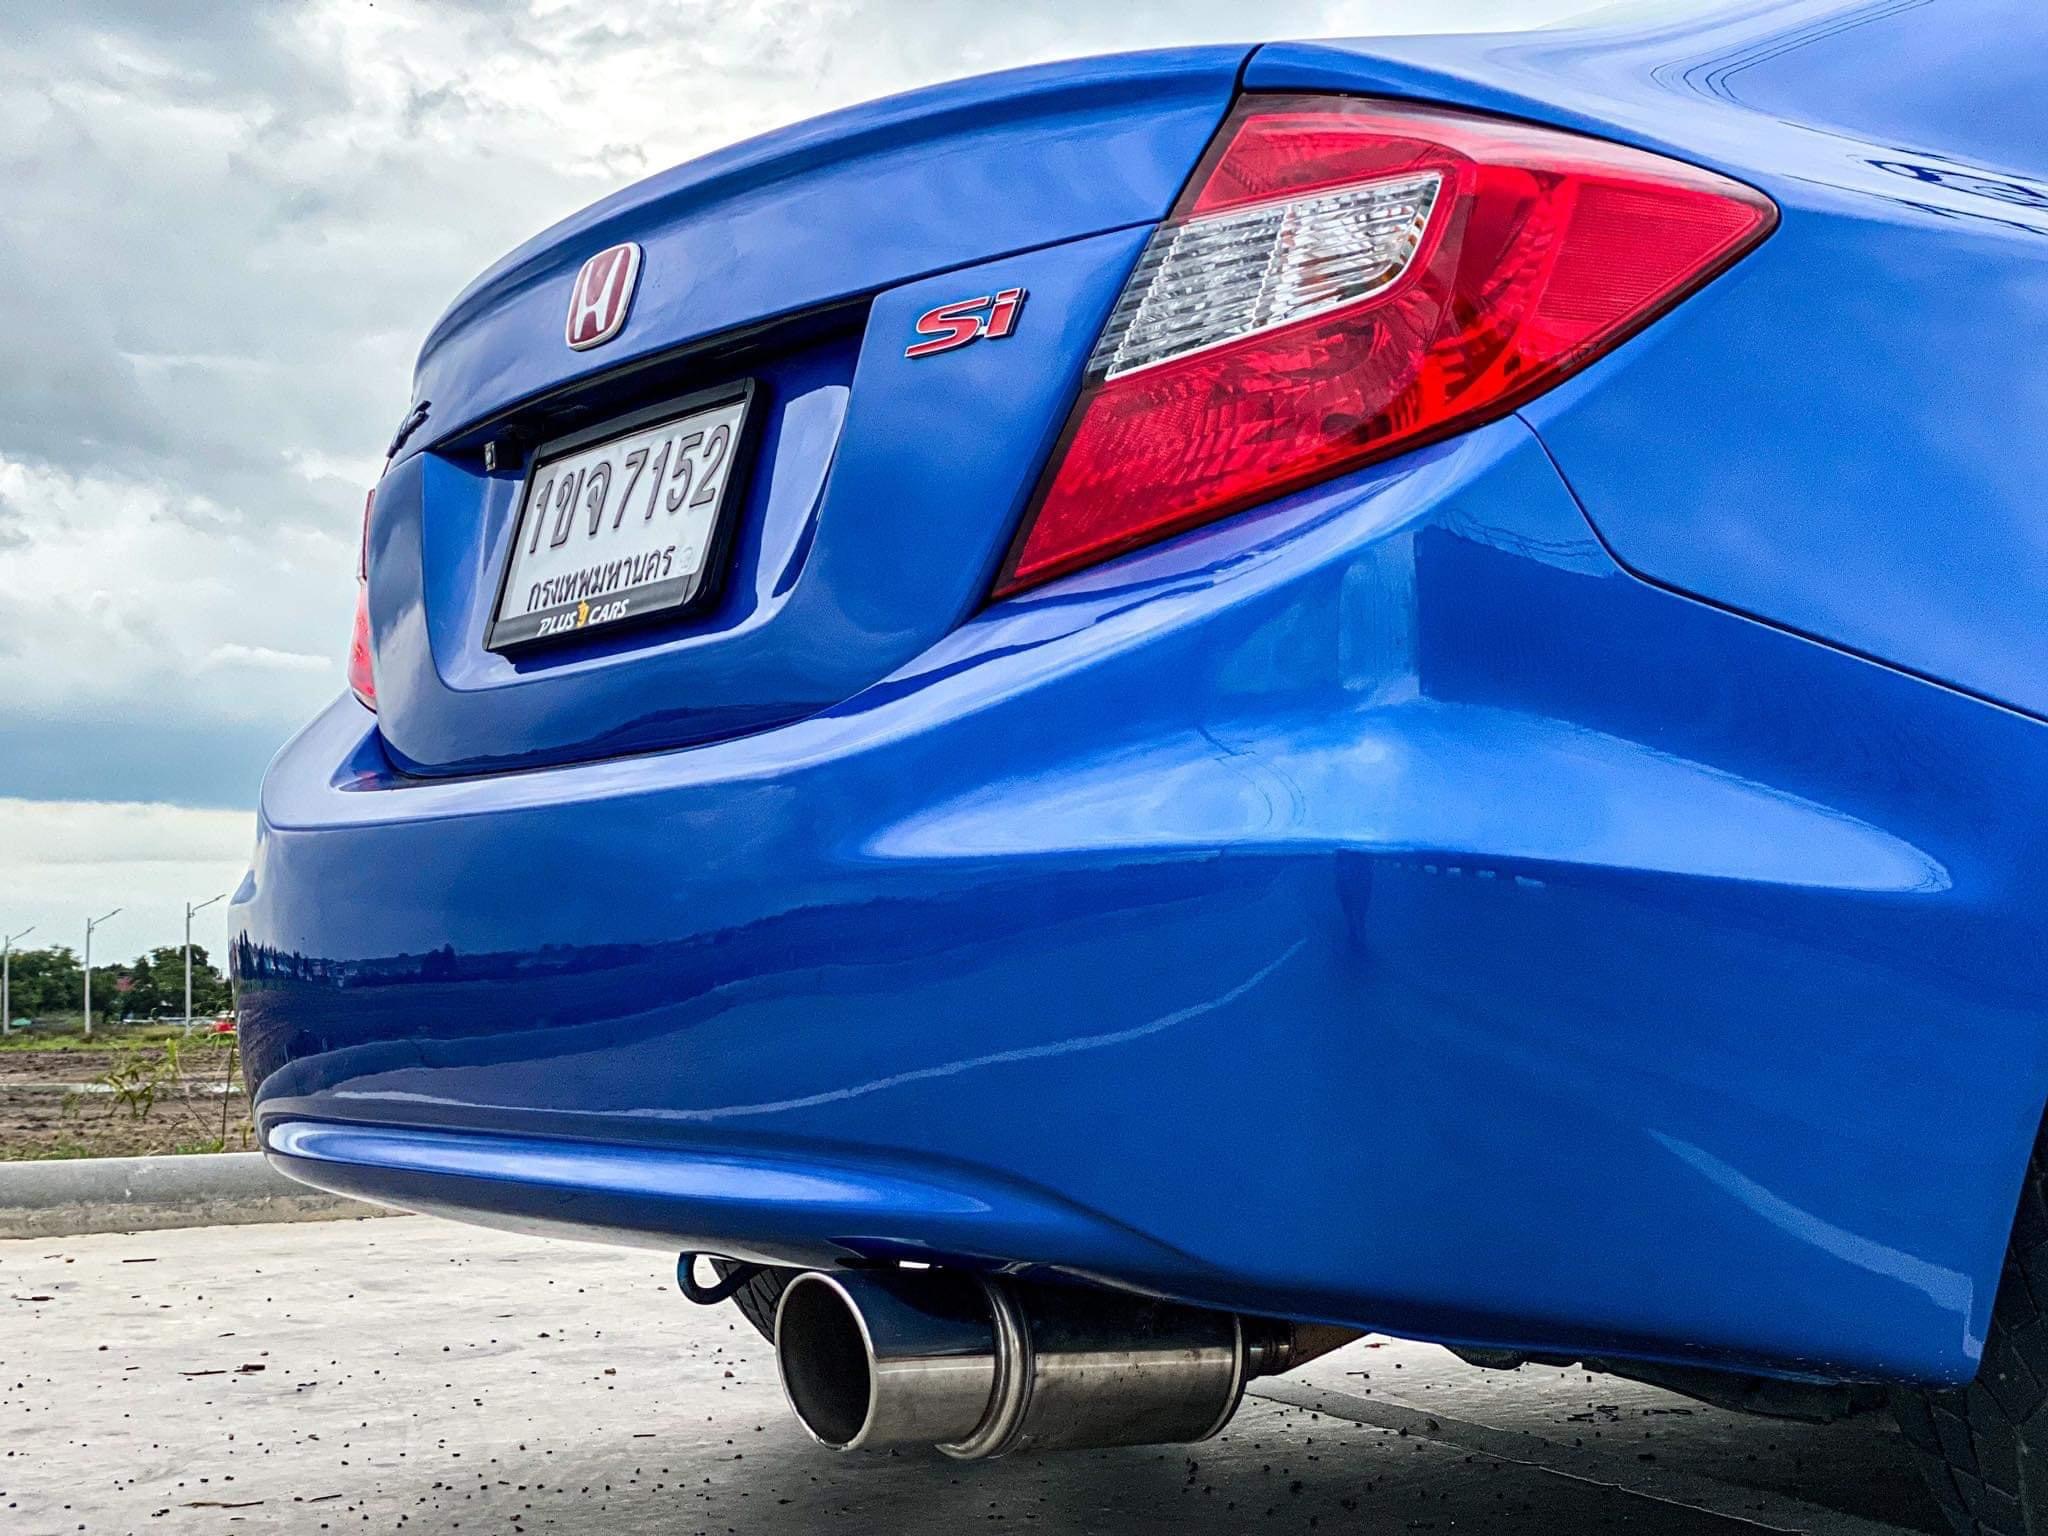 Honda Civic FB ปี 2012 สีน้ำเงิน